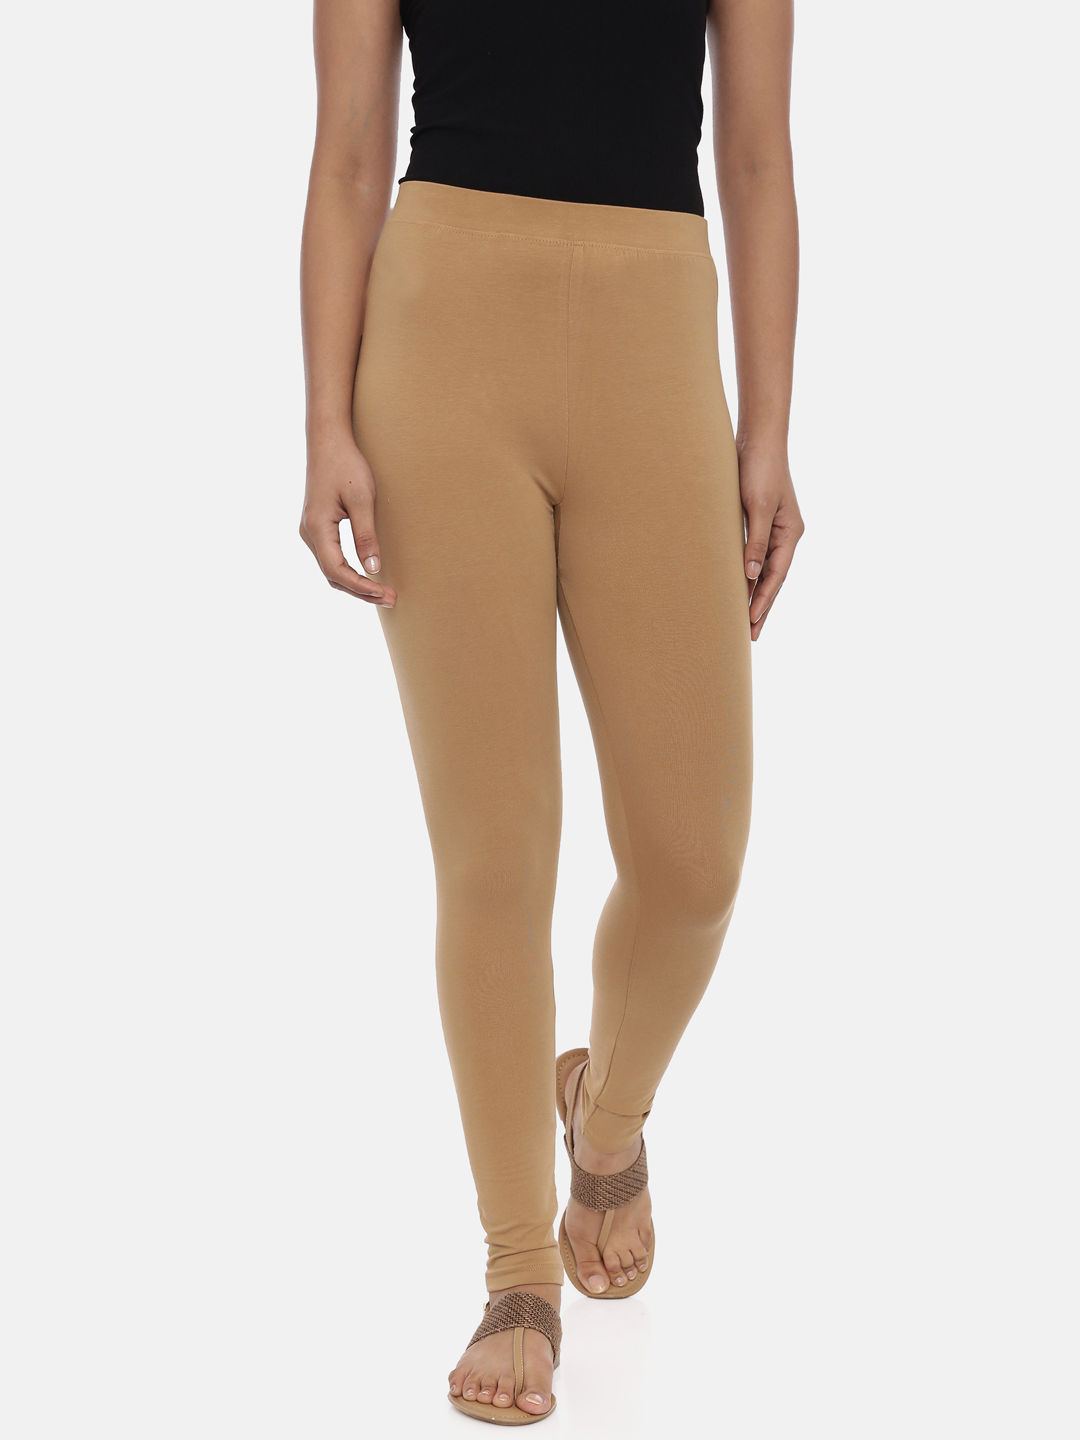 Pants Women Bare Legs Leggings Comfortable Compression Elastic Flesh-colored  | eBay